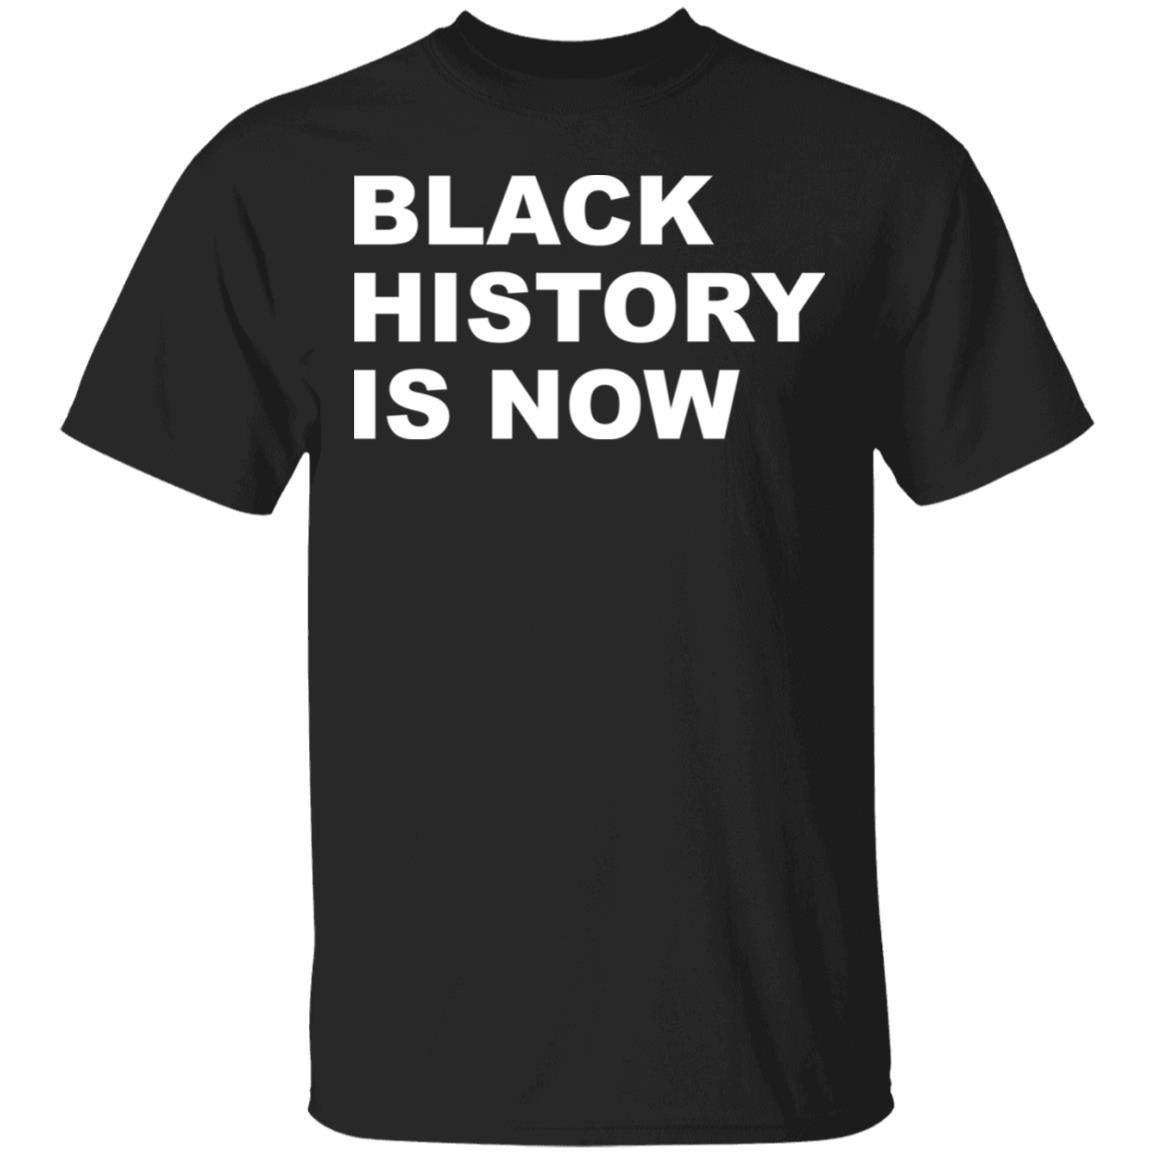 Black history is now shirt - Rockatee